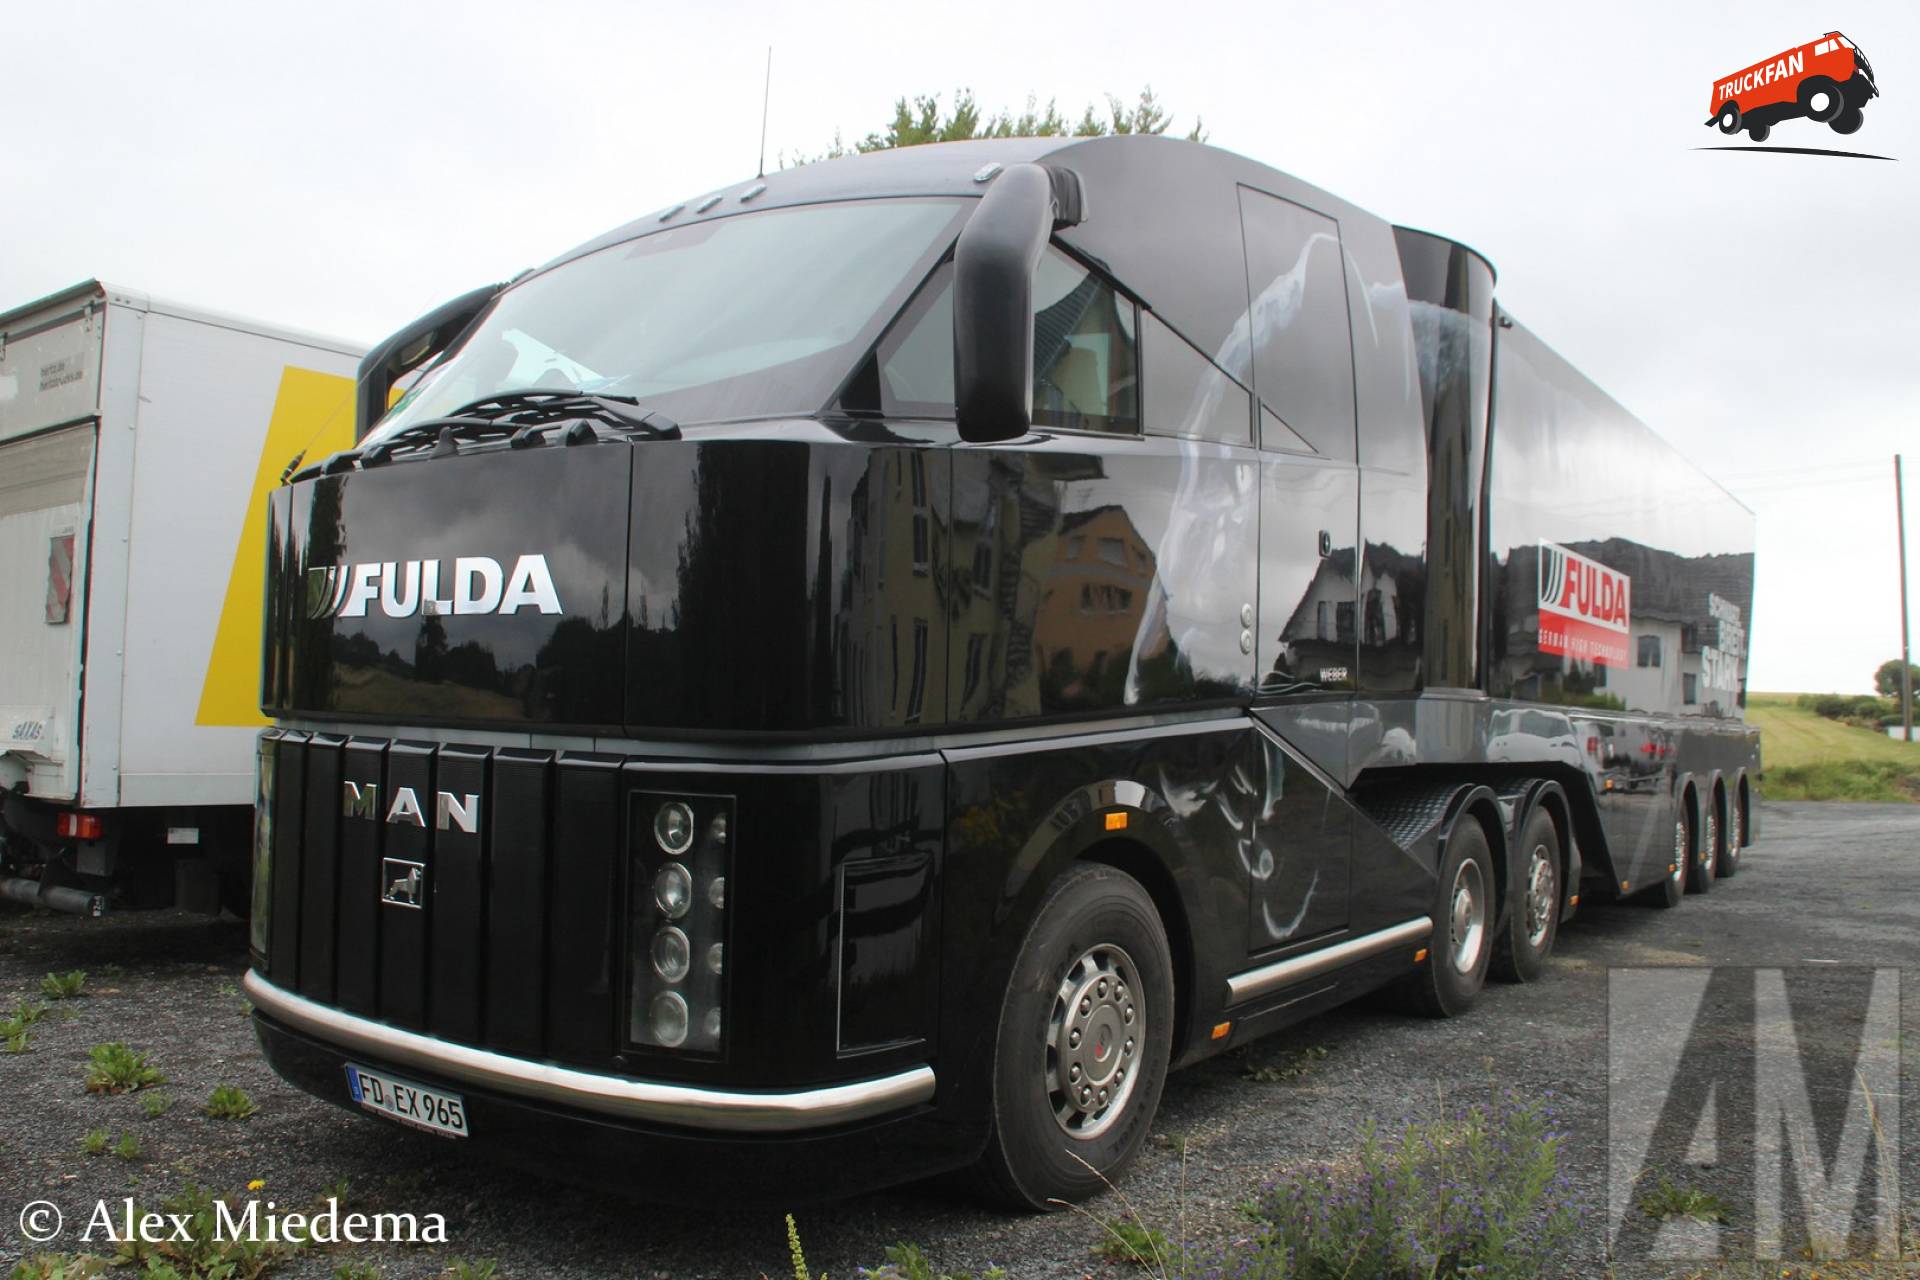 MAN Fulda truck